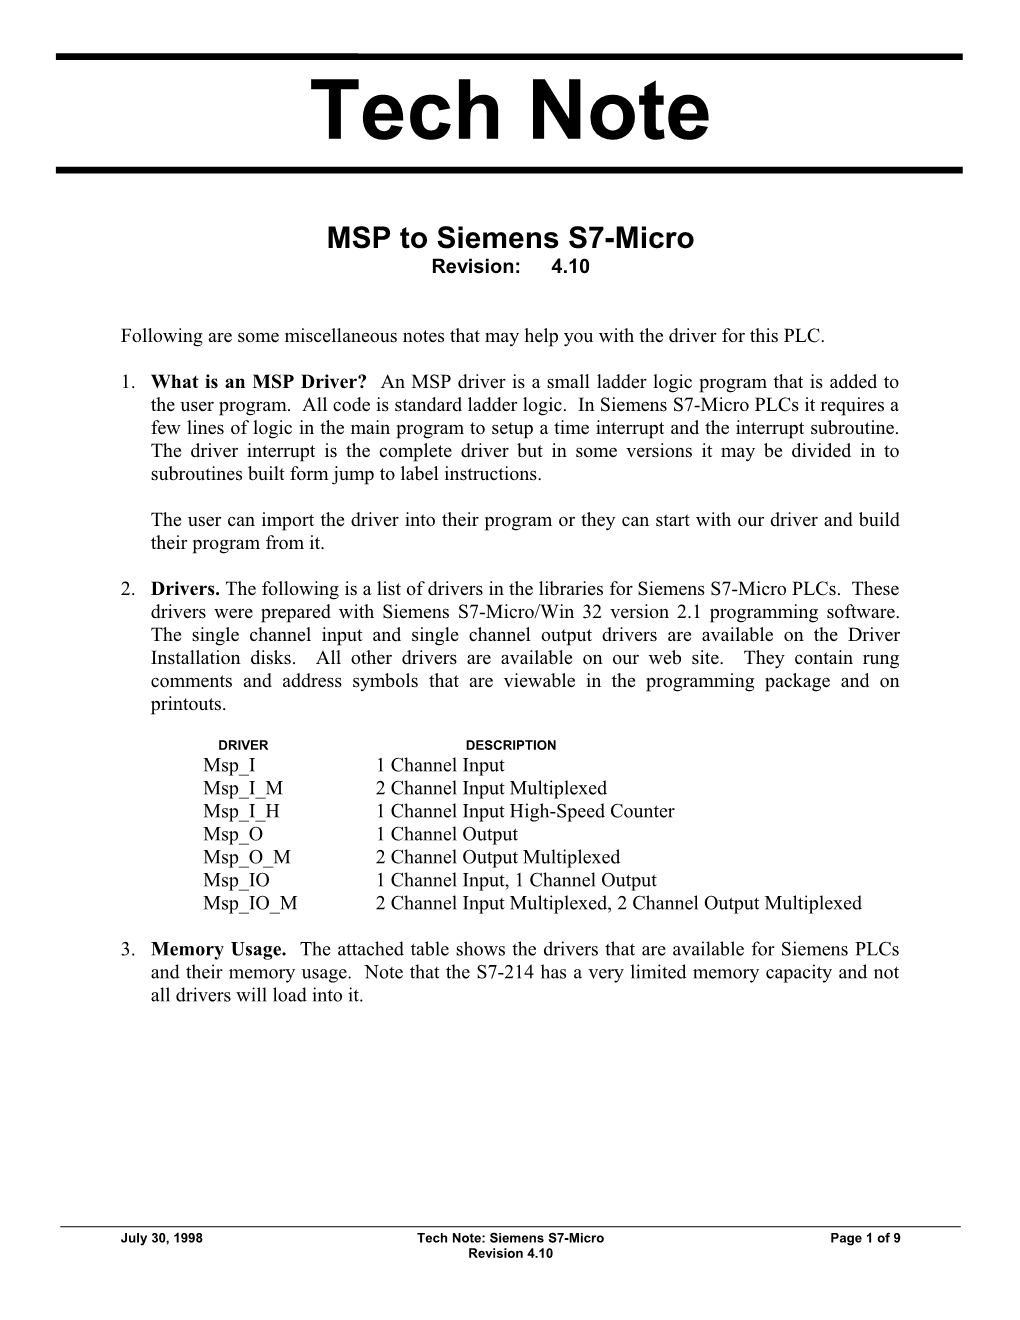 MSP to Siemens S7-Micro